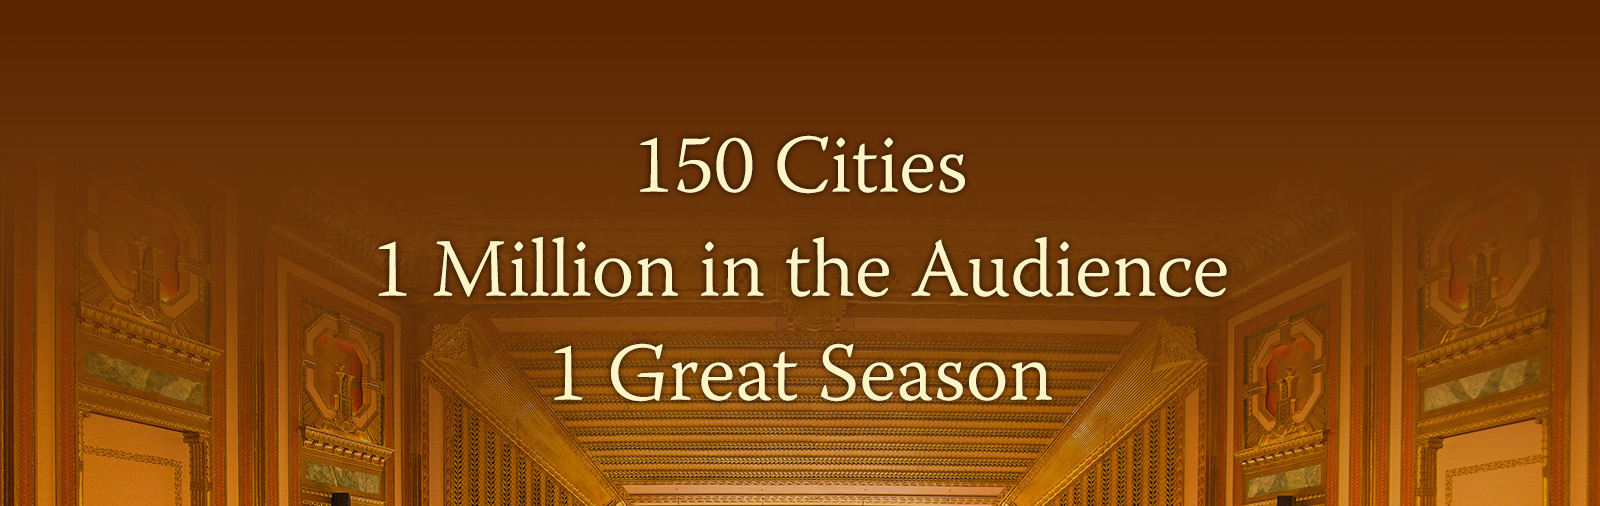 150 Cities 1 Million Live Audience 1 Great Season